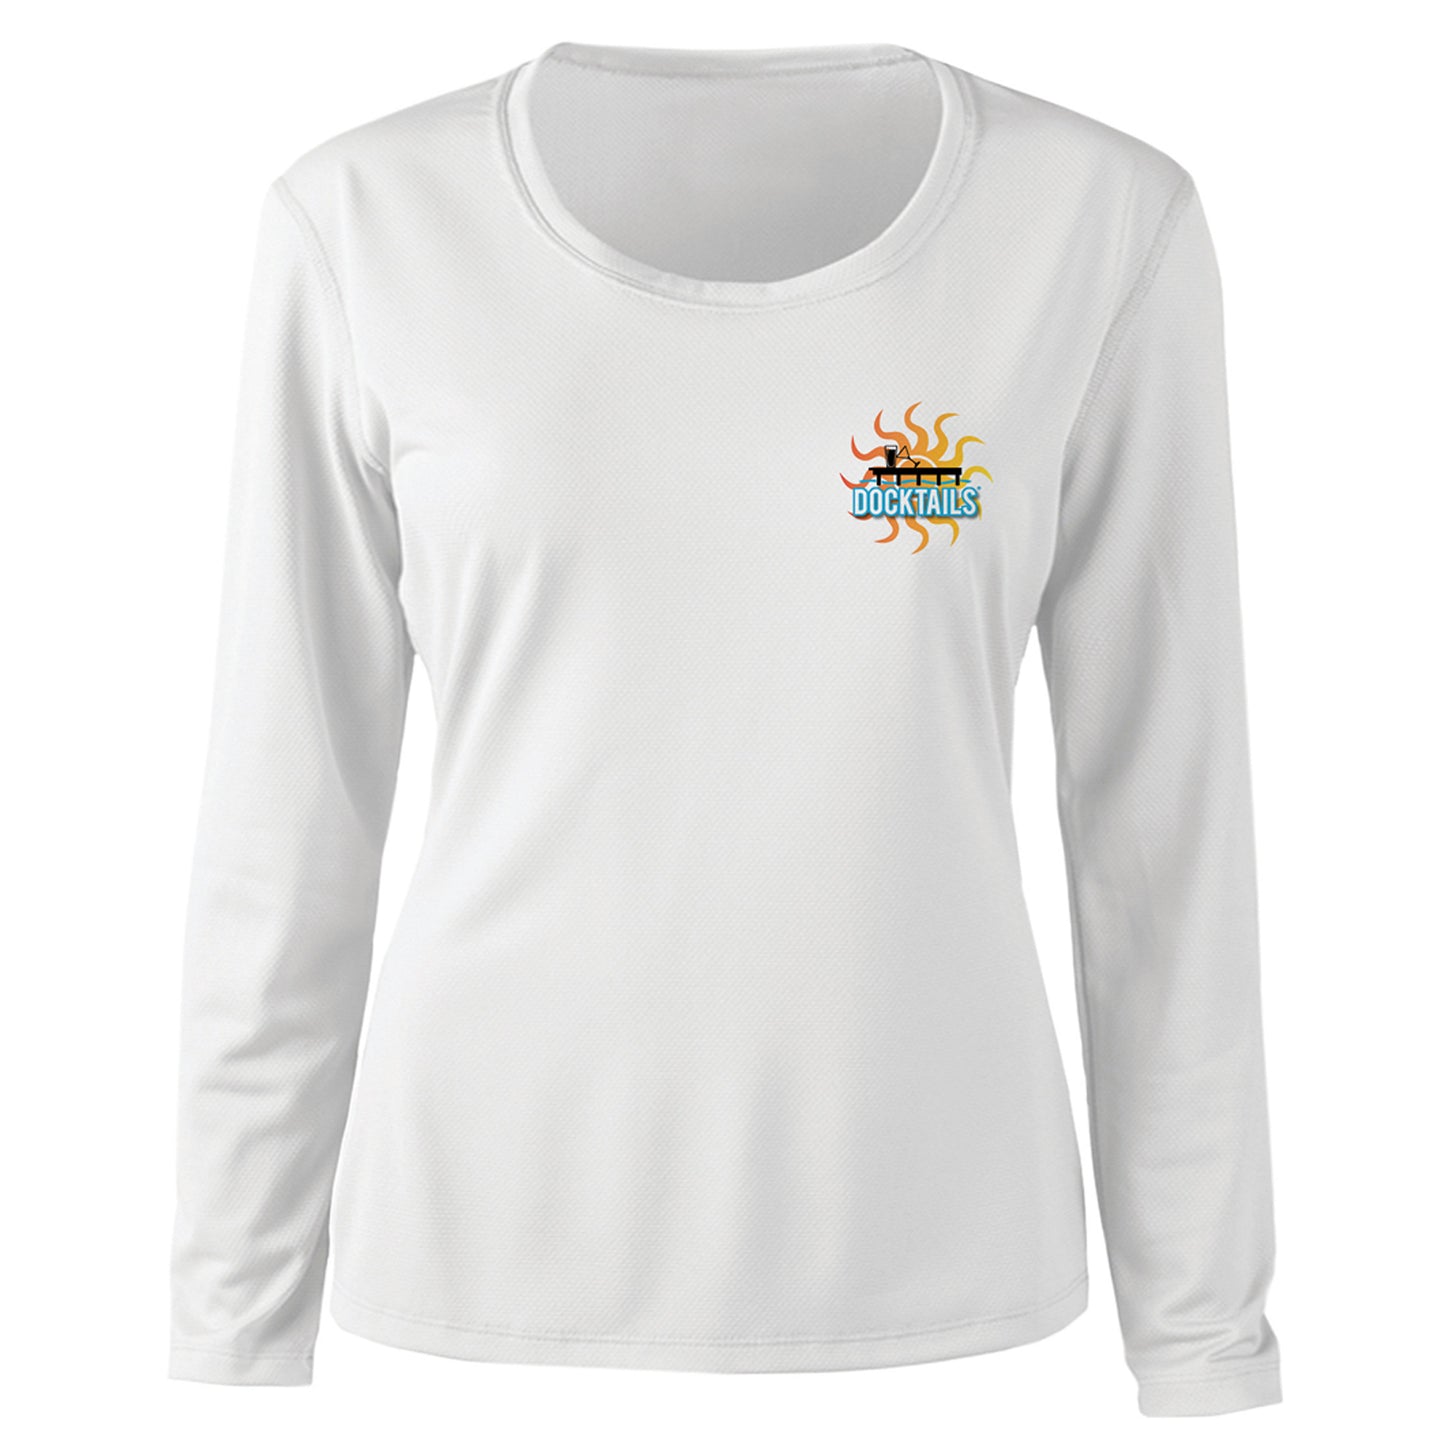 Docktails Adirondack logo women's sun shirt in white UPF 50 protection fabric front of shirt